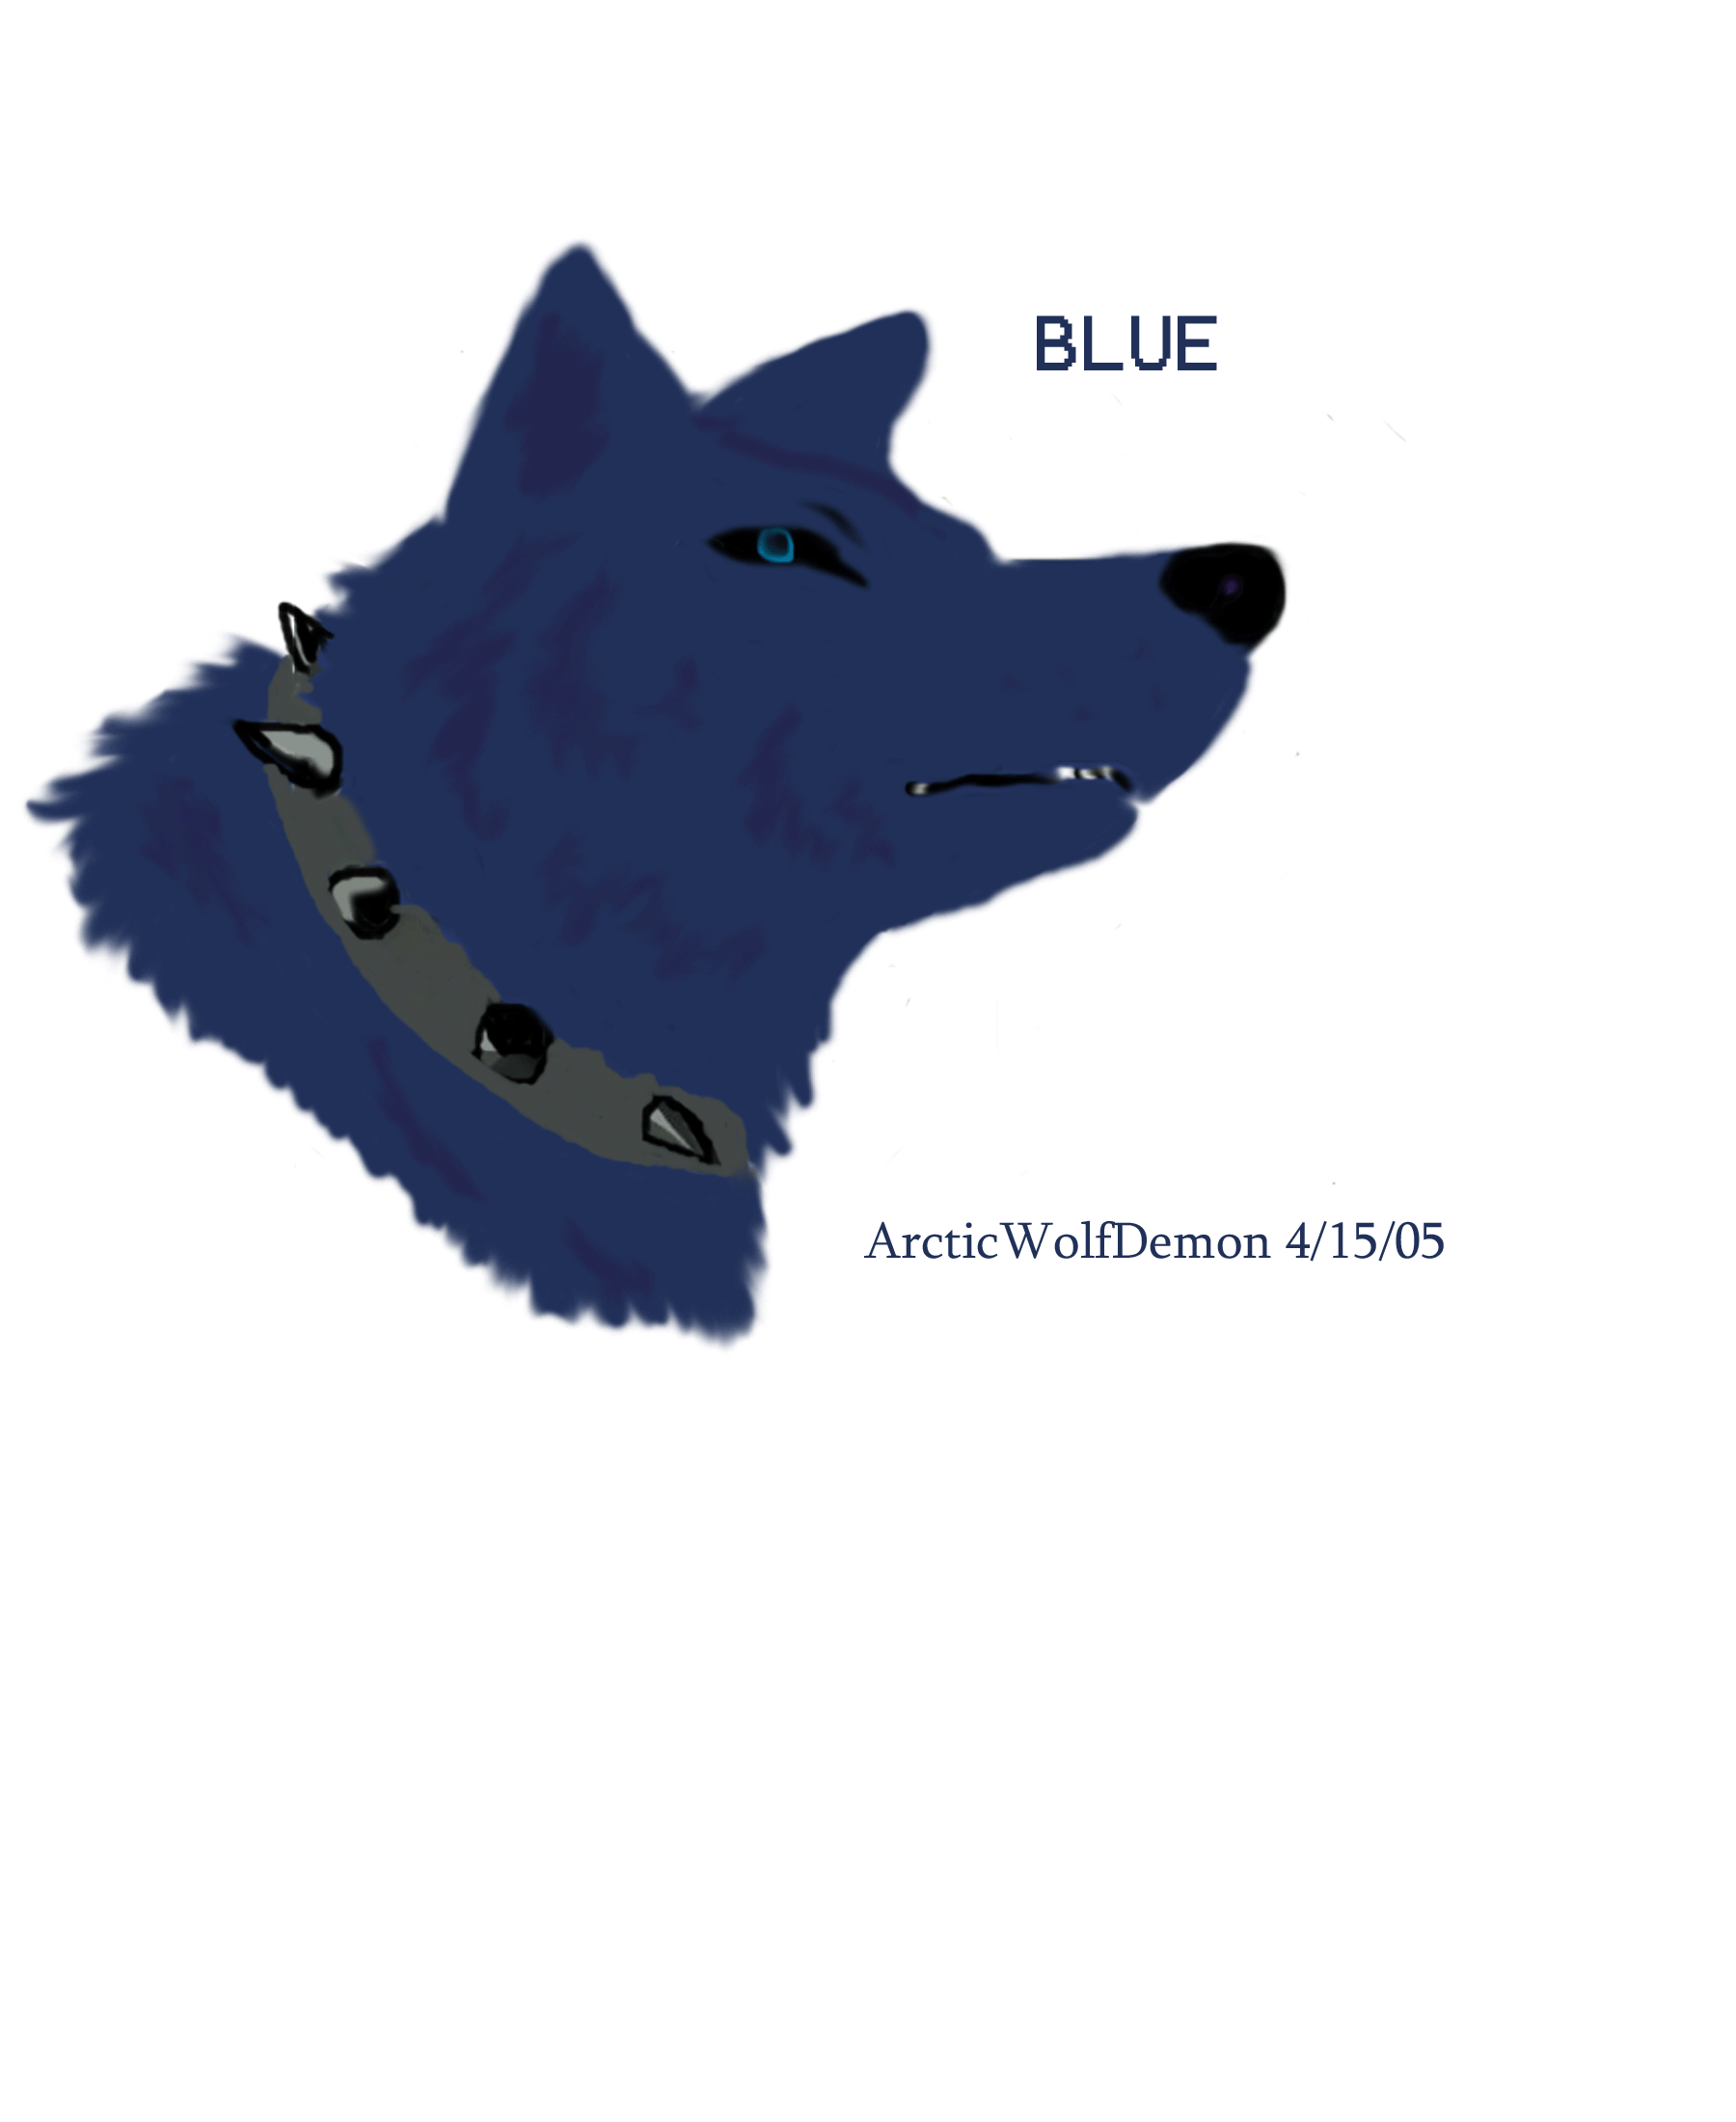 Blue2 by ArcticWolfDemon